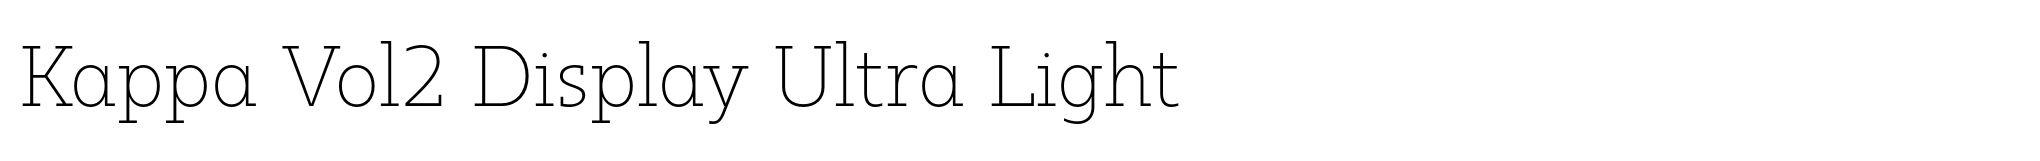 Kappa Vol2 Display Ultra Light image